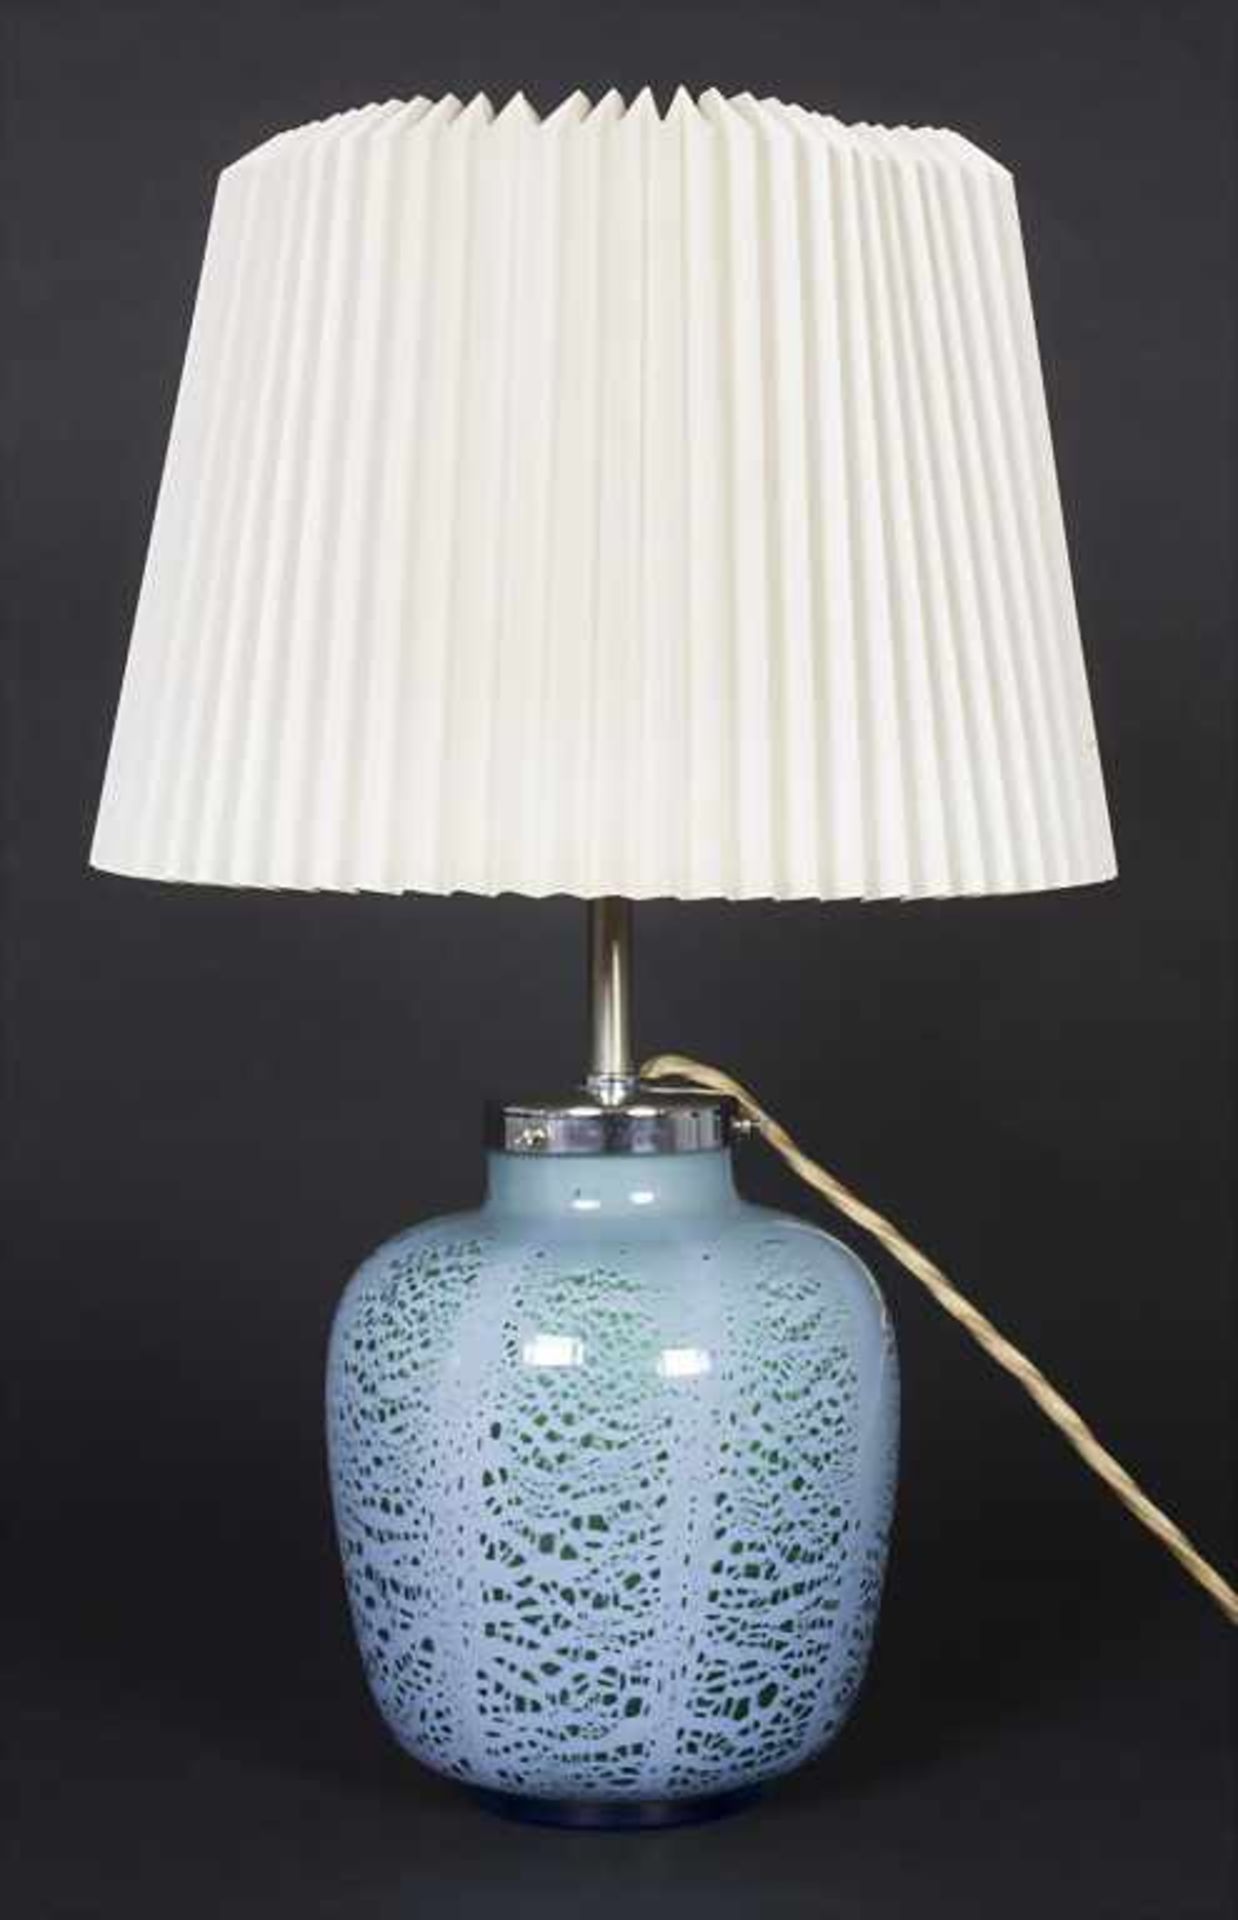 Art Déco Tischlampe / An Art Deco table lamp, WMF Ikora, um 1930Material/Technik: ovoider Glasfuß